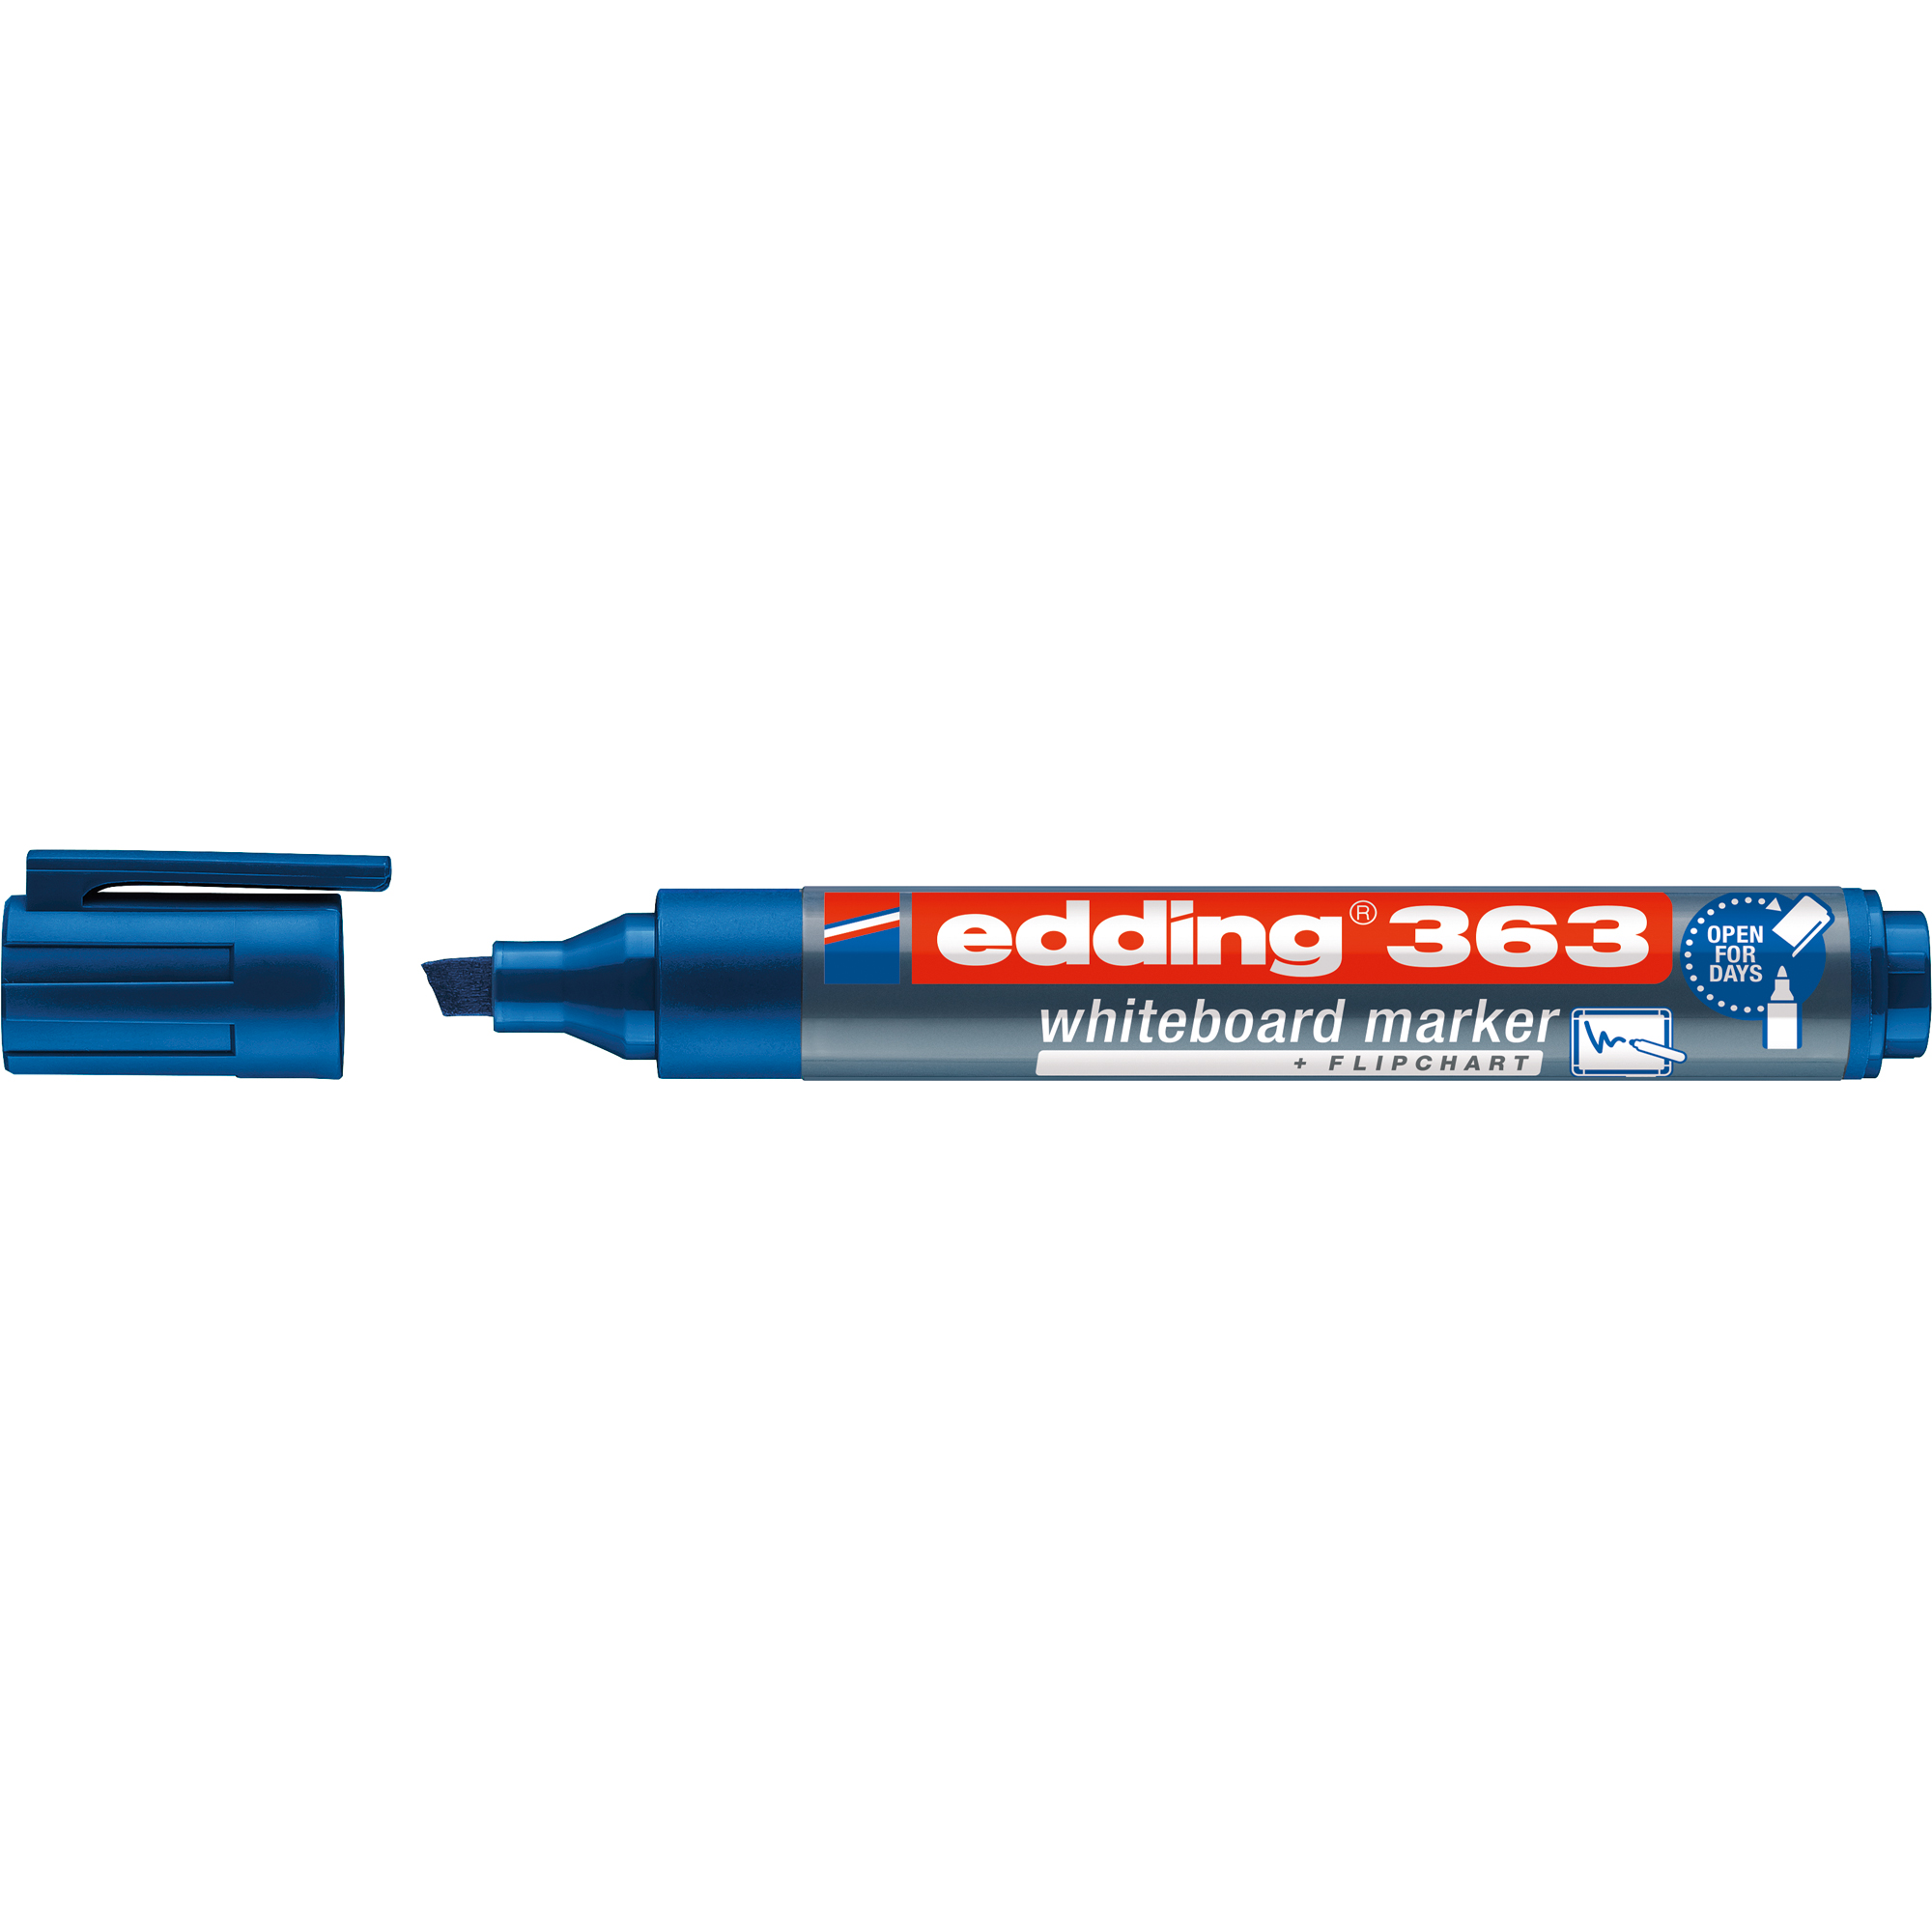 edding Whiteboardmarker 363 blau